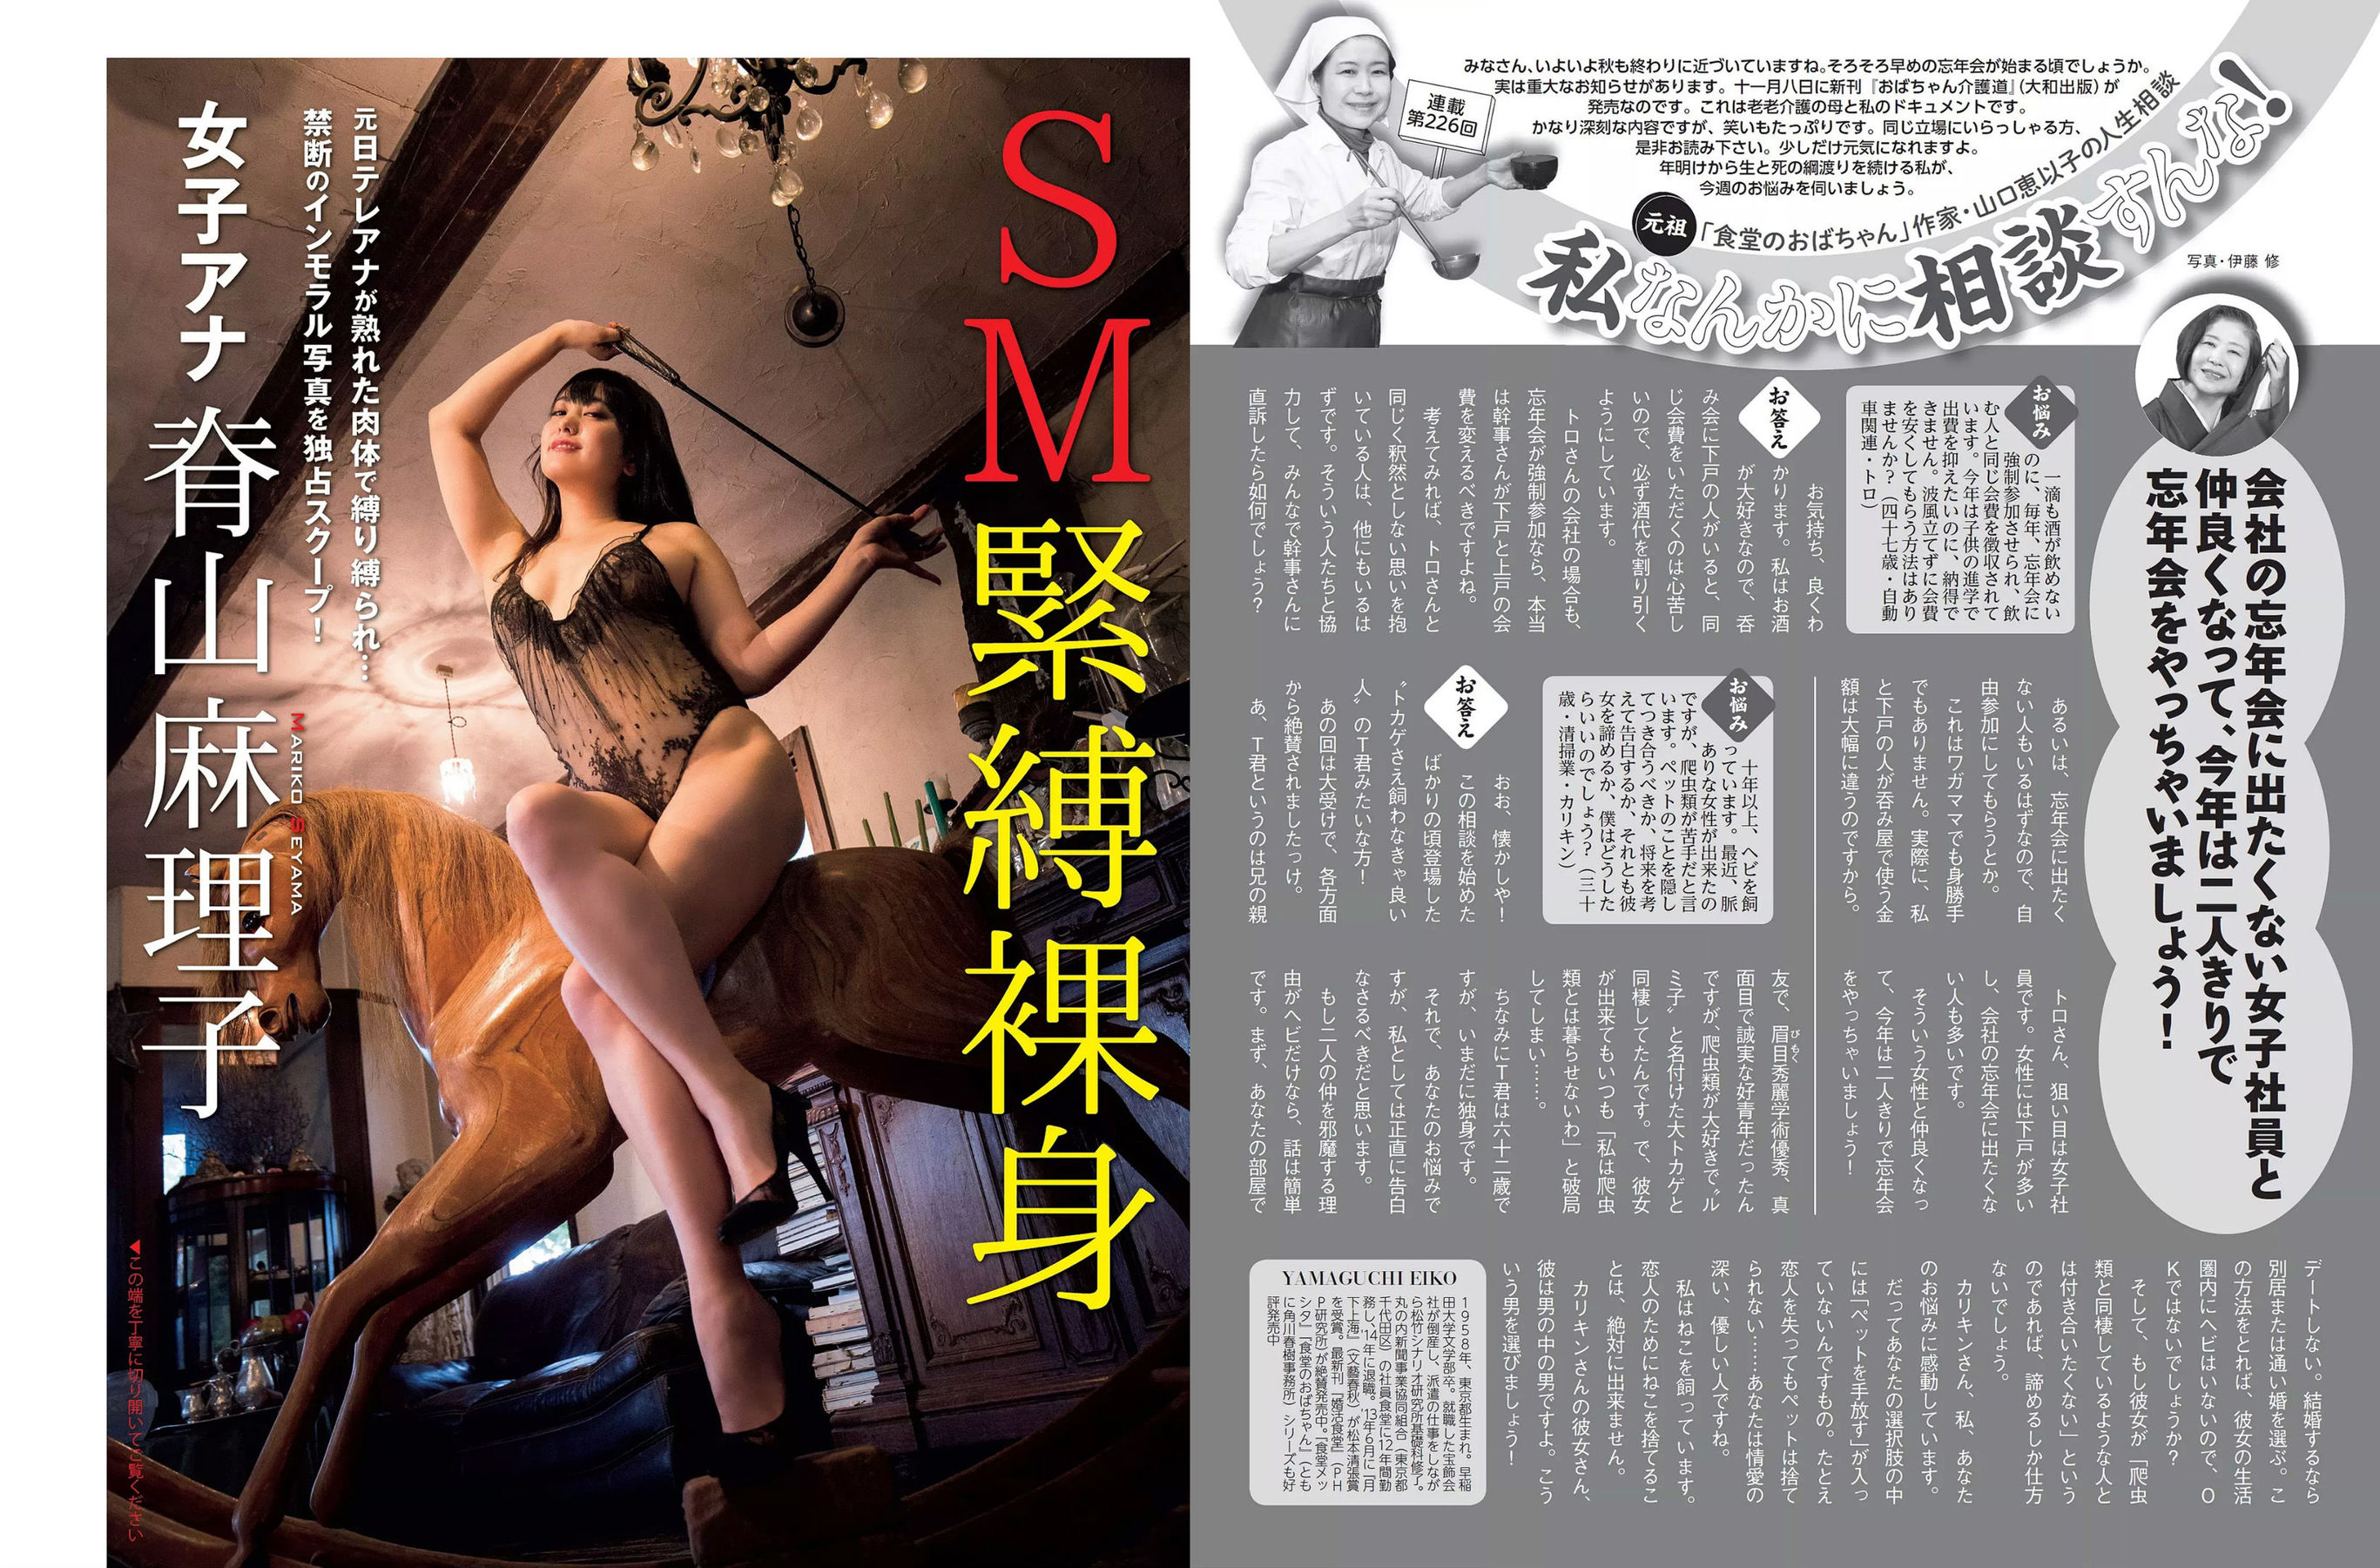 [FLASH]杂志:福岛雪菜高品质私家拍摄作品在线浏览(17P)